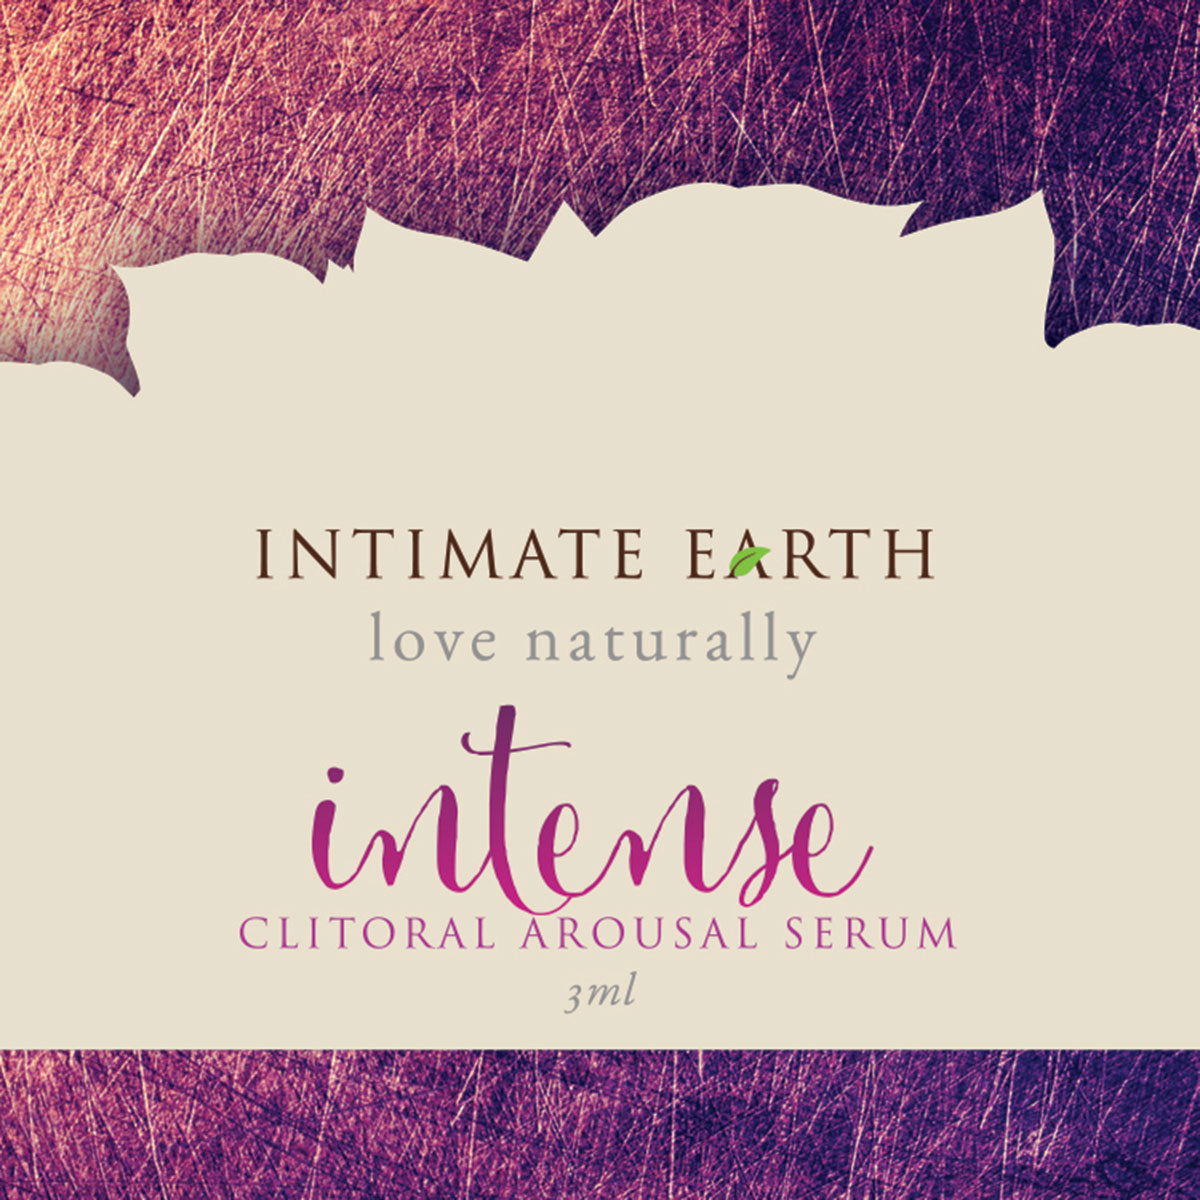 Intimate Earth Intense Clitoral Arousal Serum 3ml Foil SINGLE